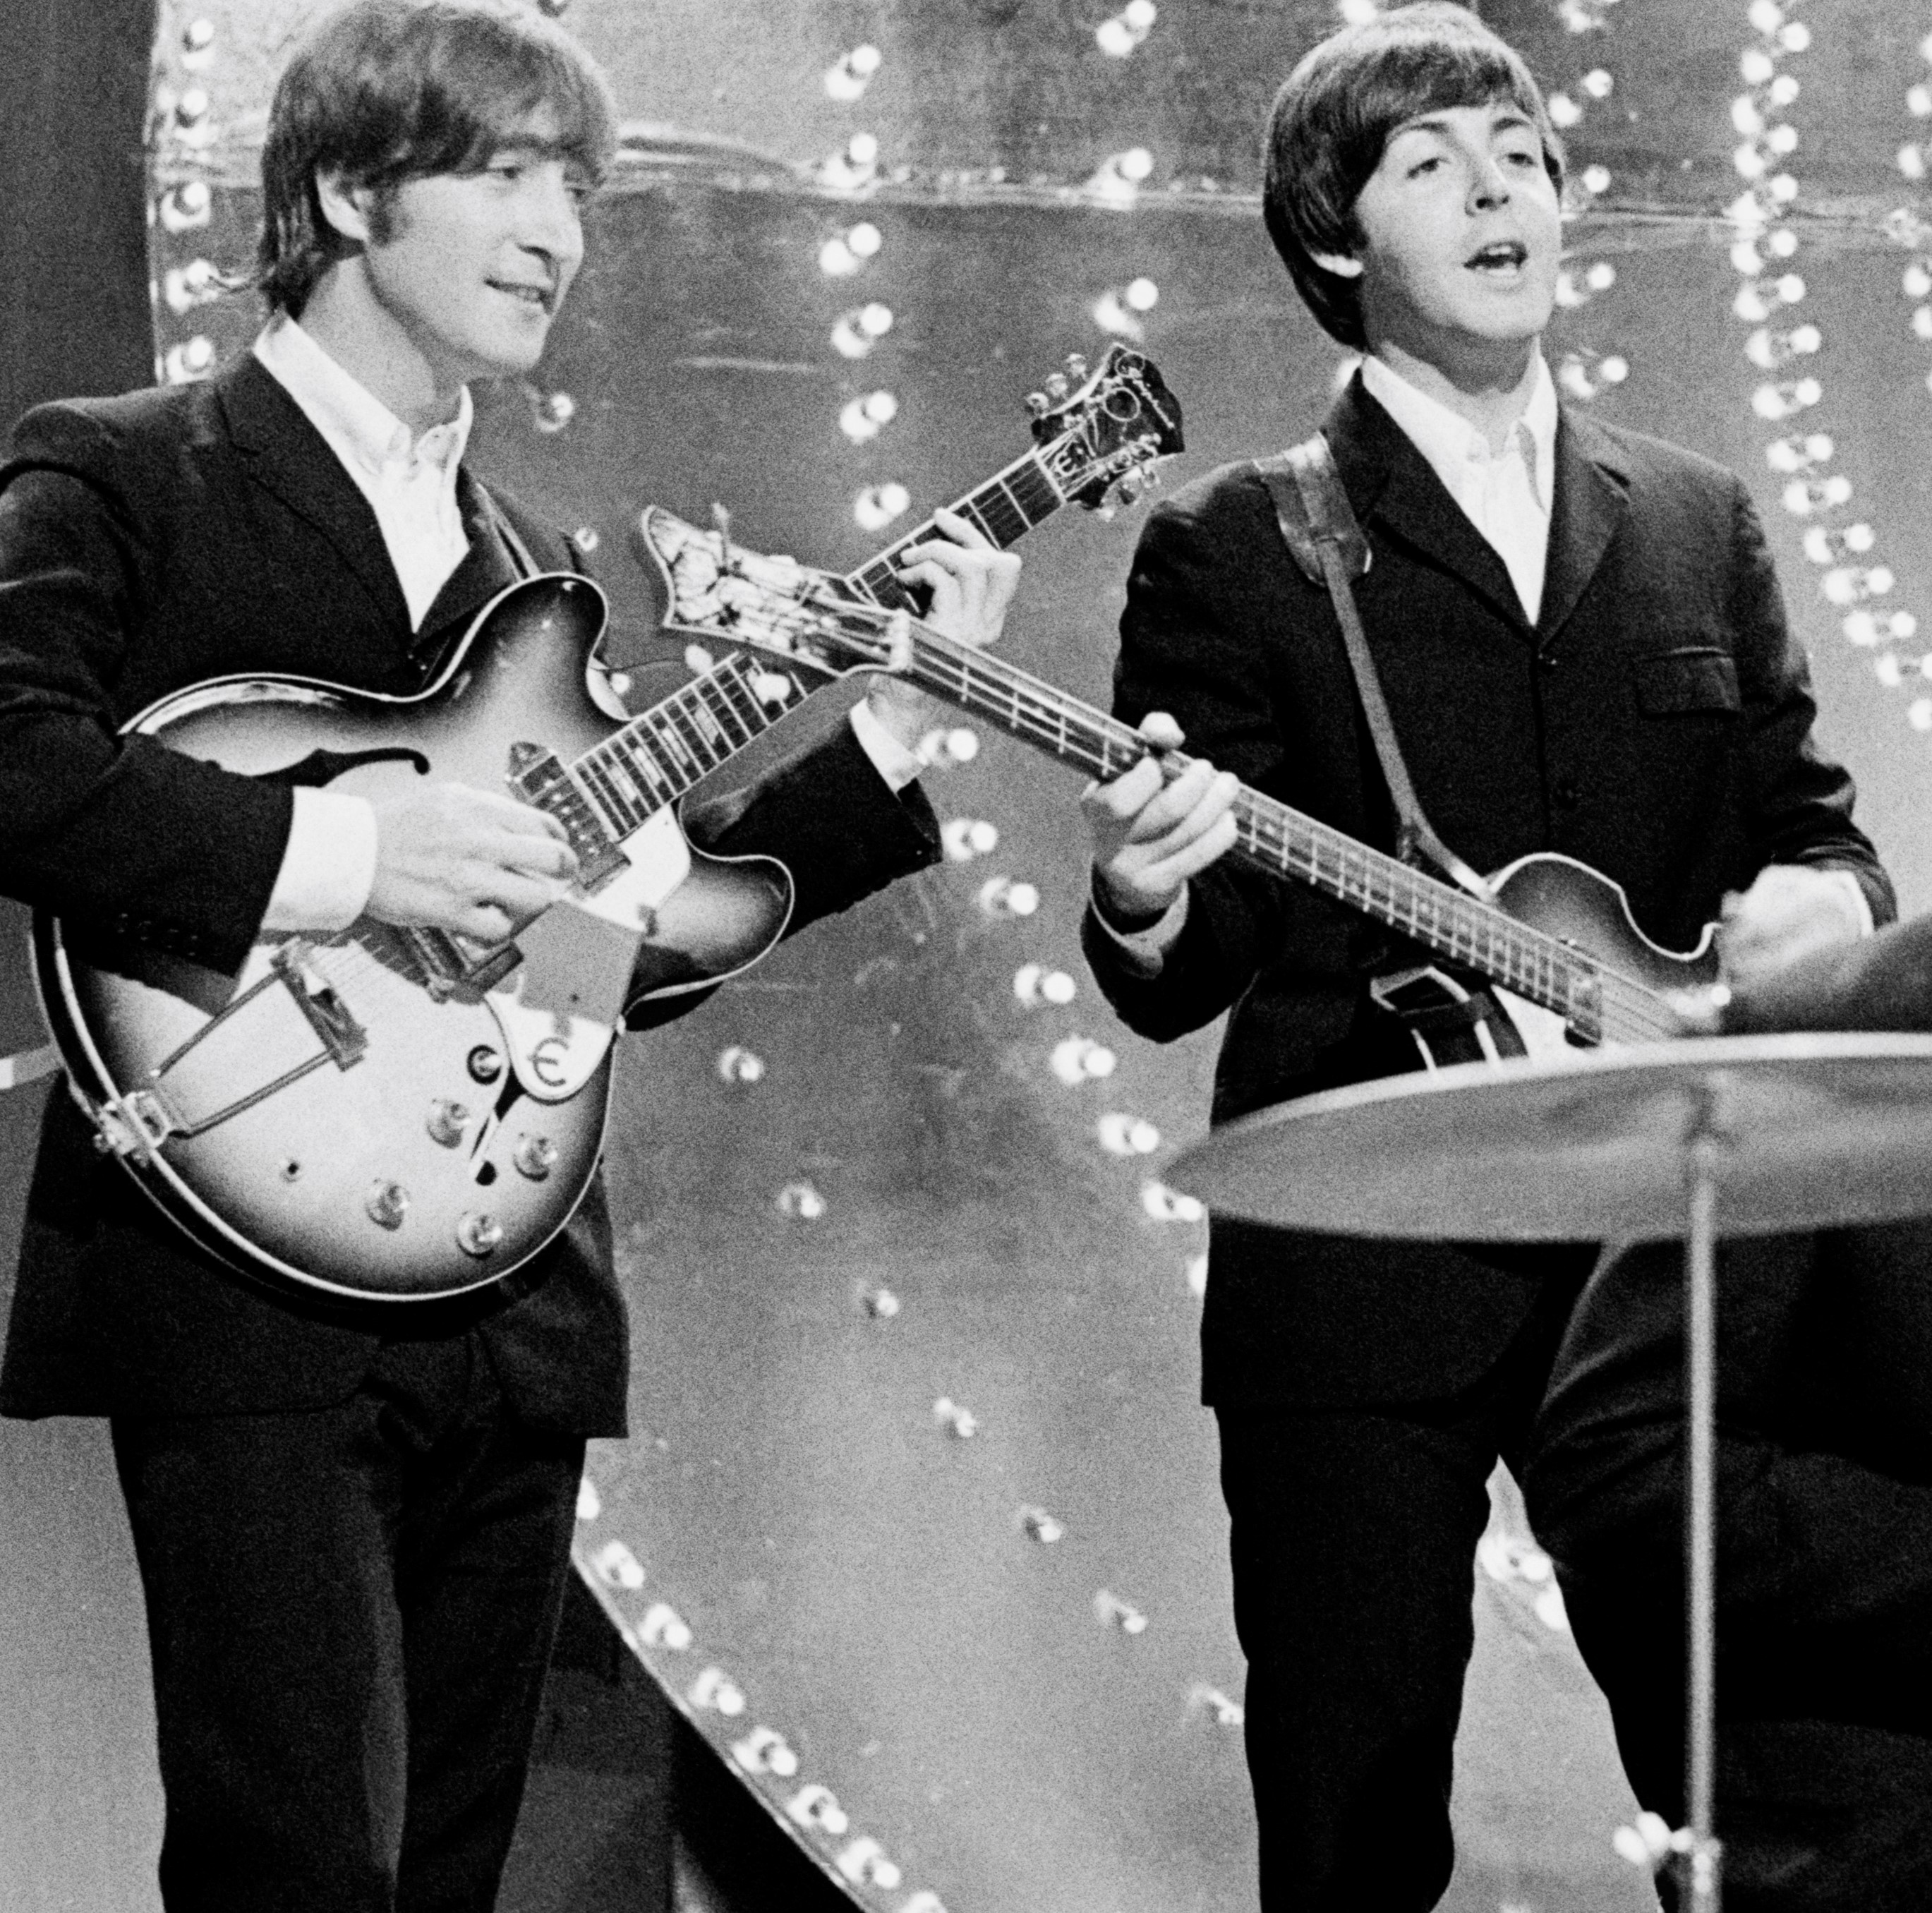 John Lennon and Paul McCartney playing The Beatles' songs on guitars